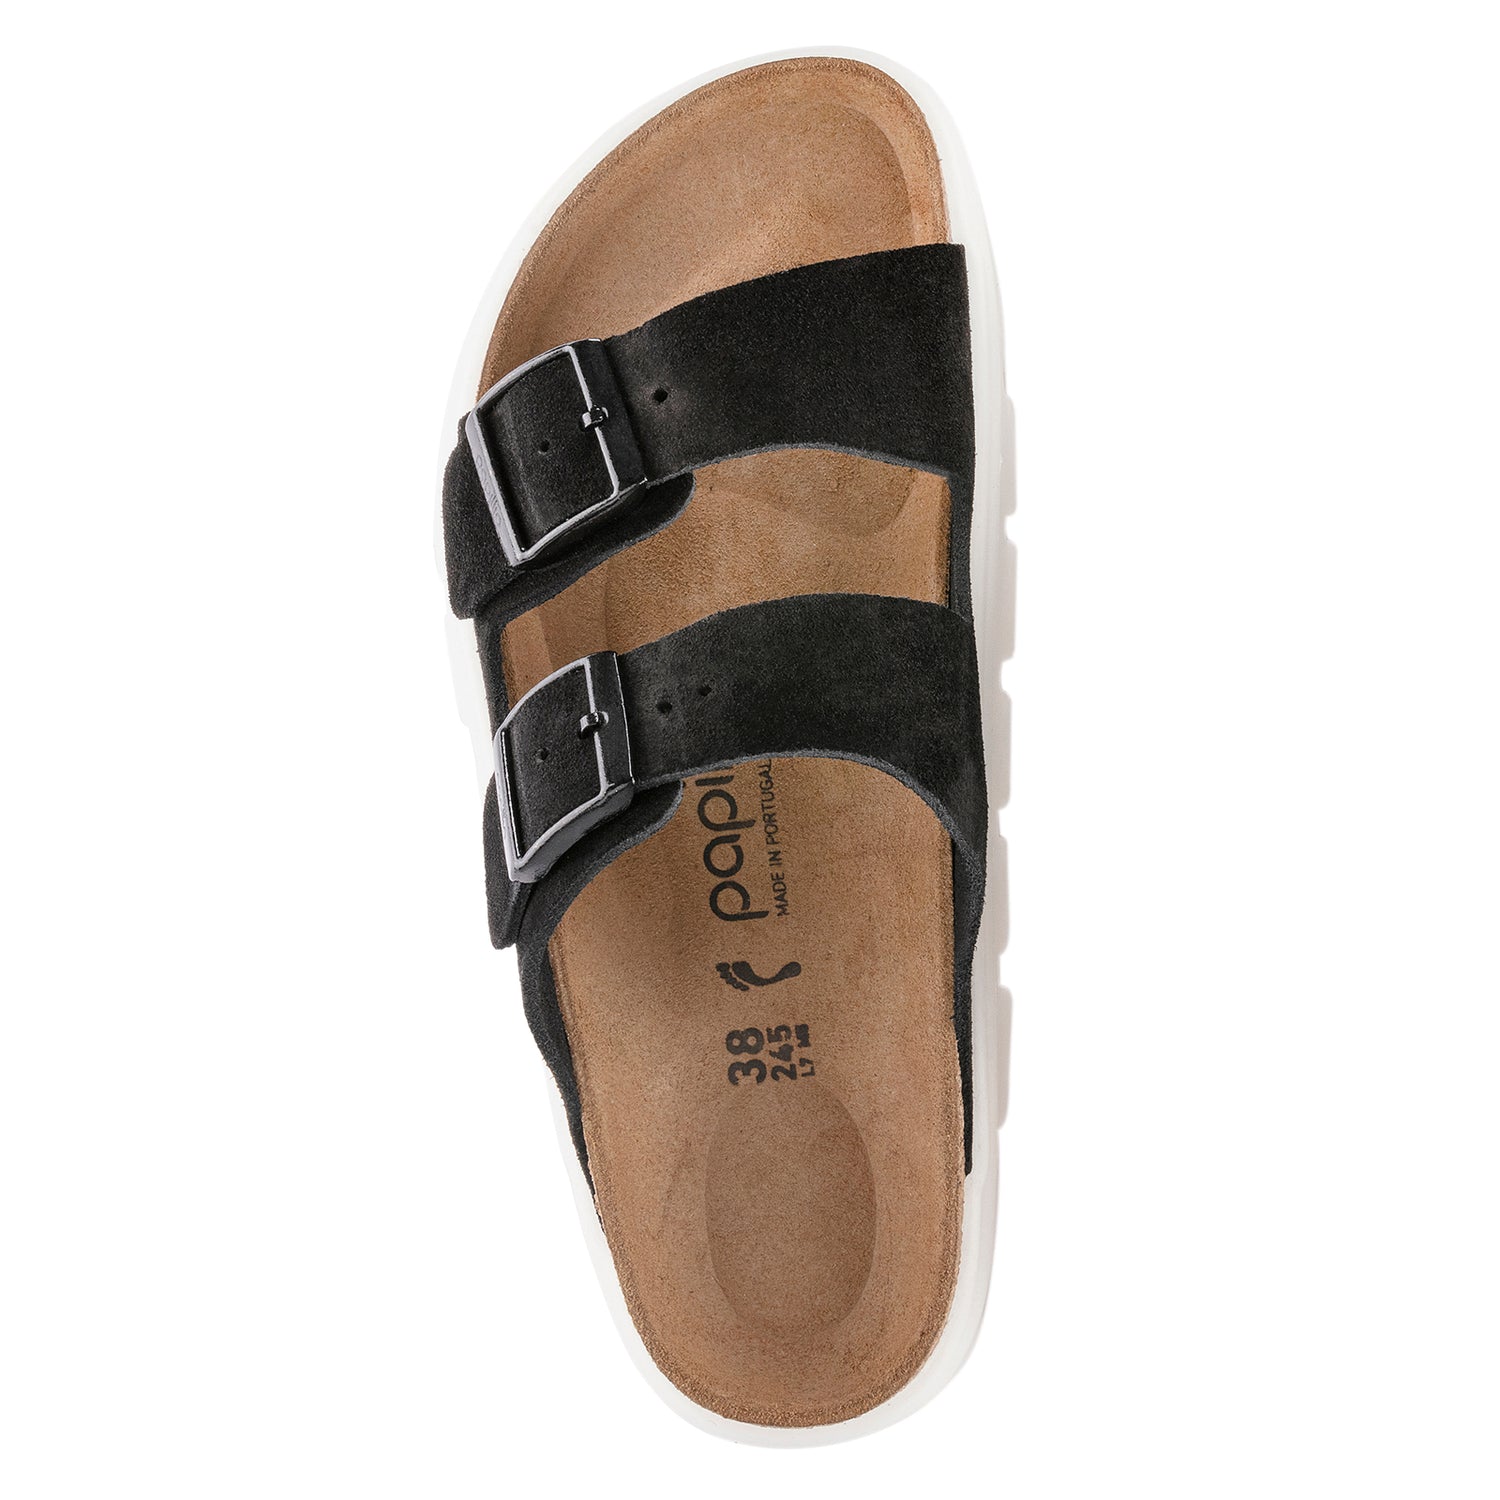 Peltz Shoes  Women's Birkenstock Arizona Chunky Sandal - Narrow Fit BLACK 1023 717 N